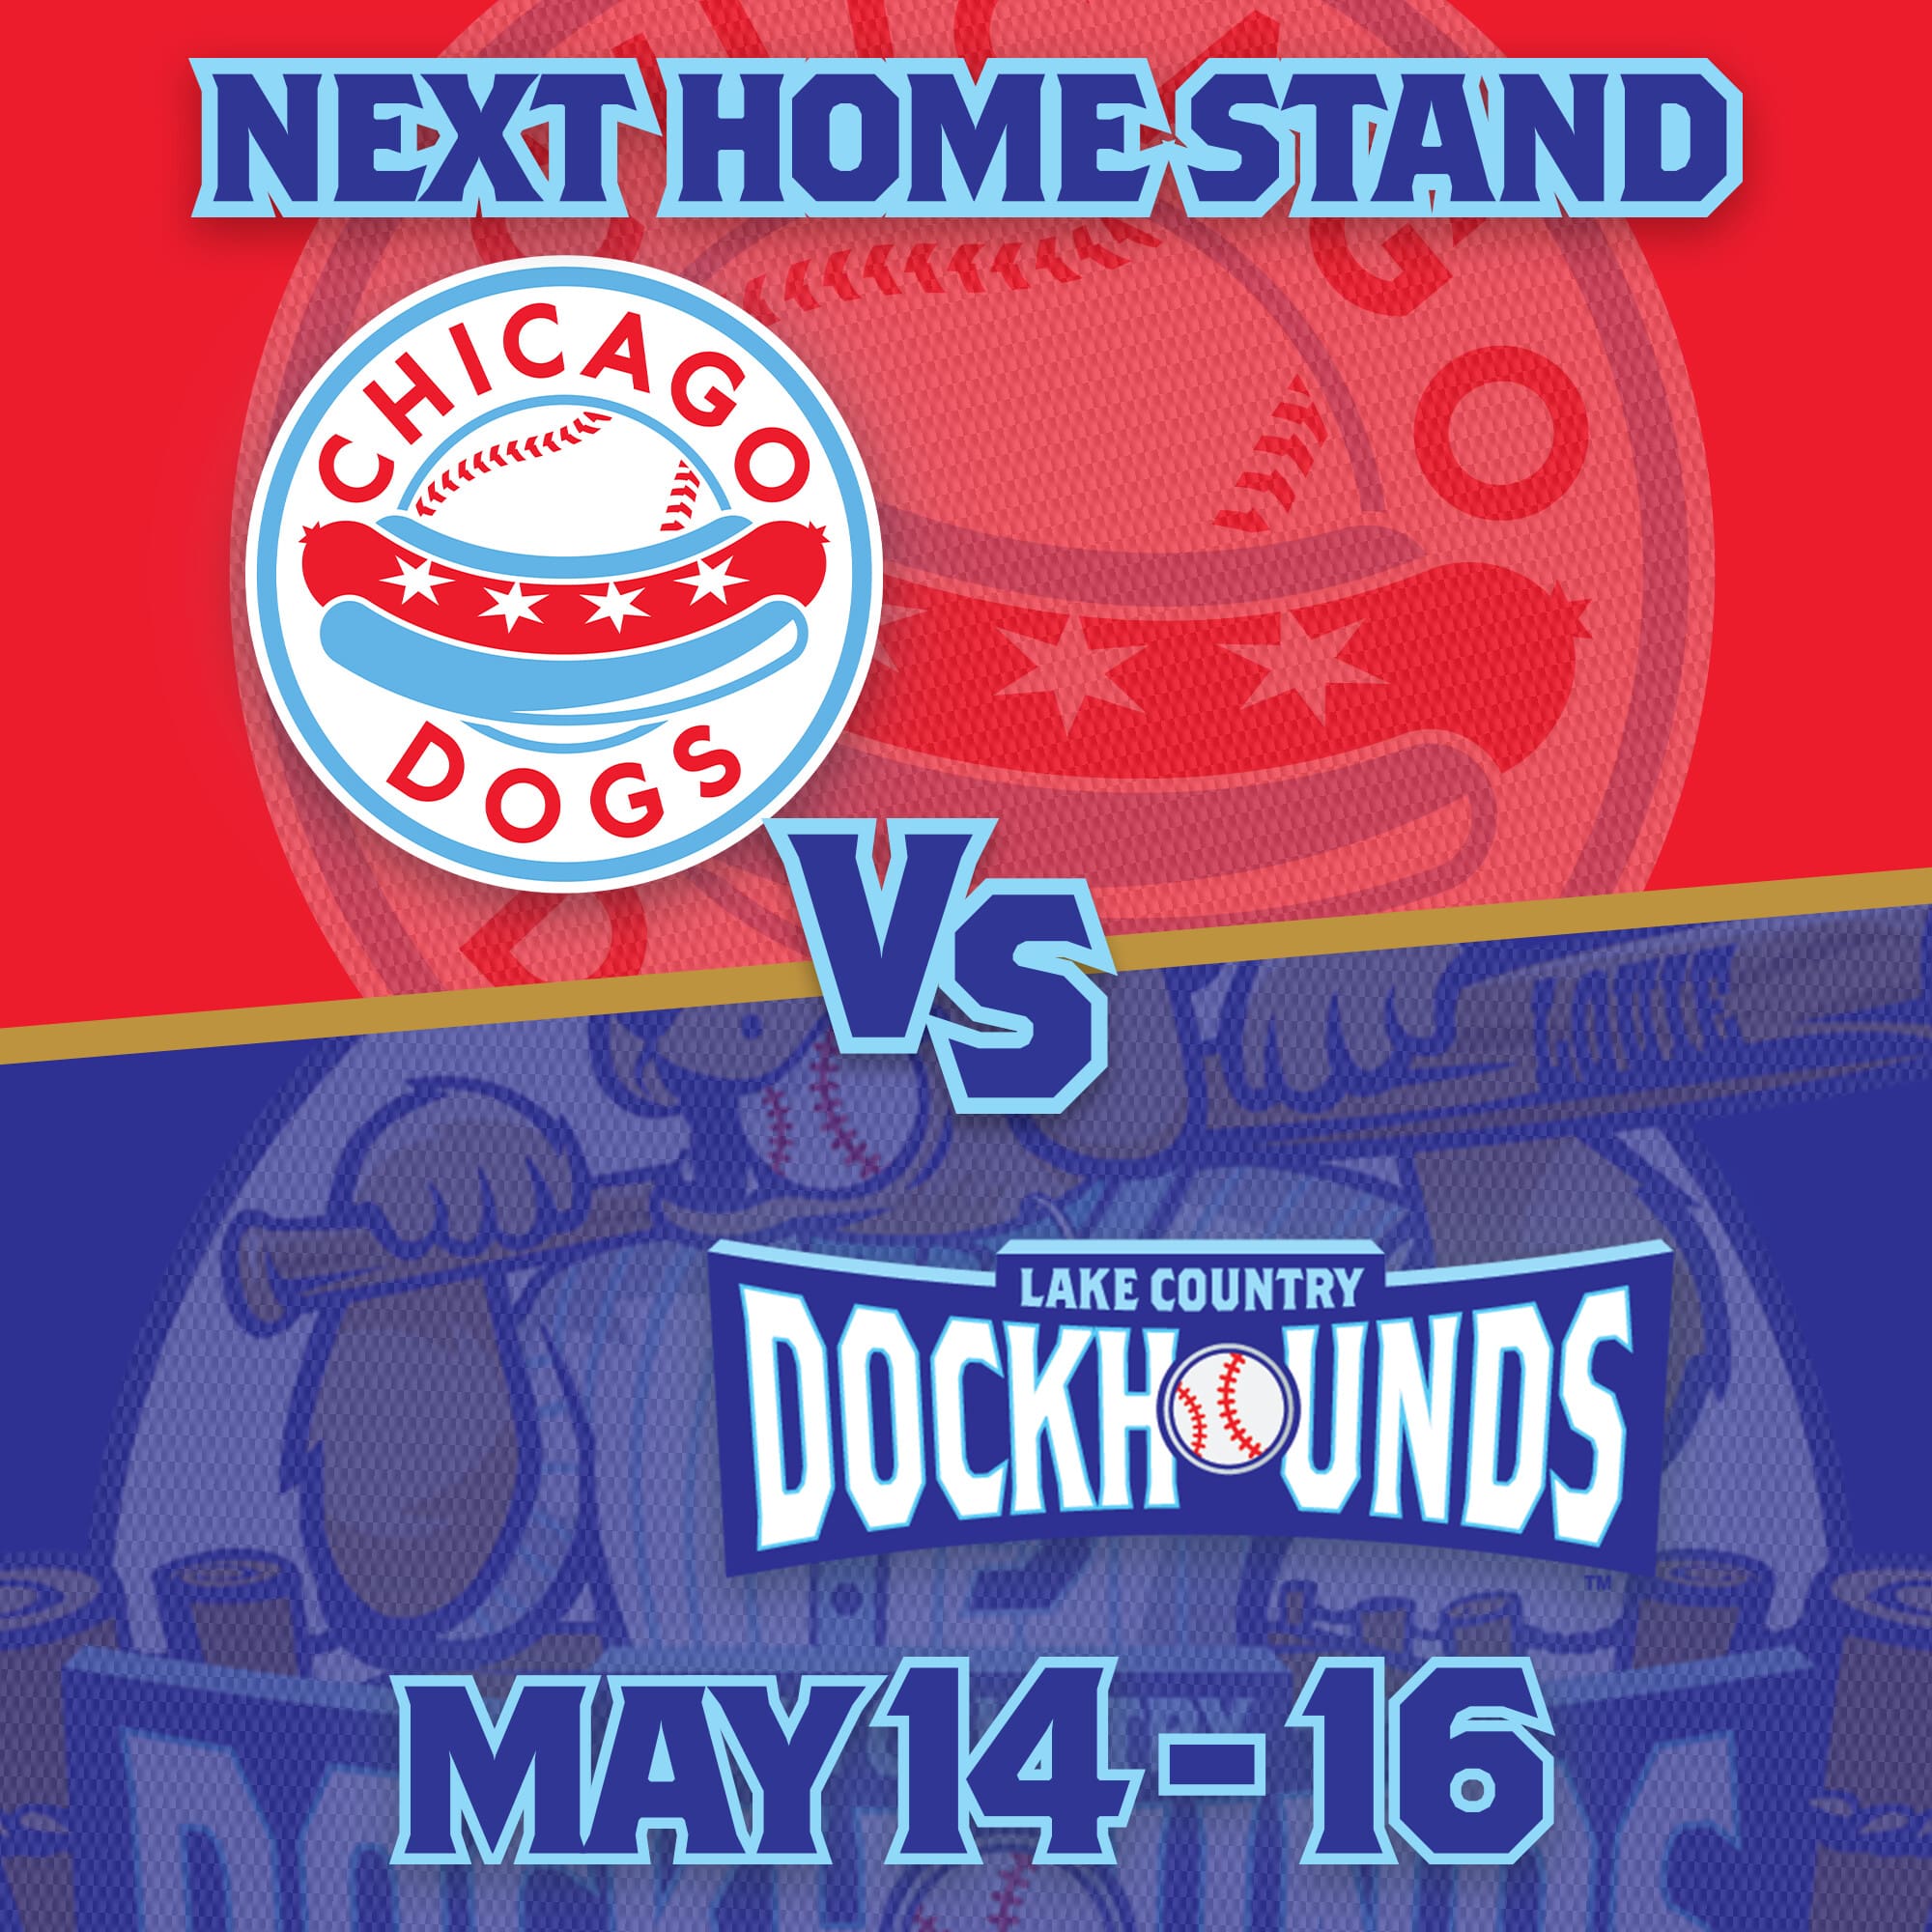 DockHounds vs Chicago Dogs